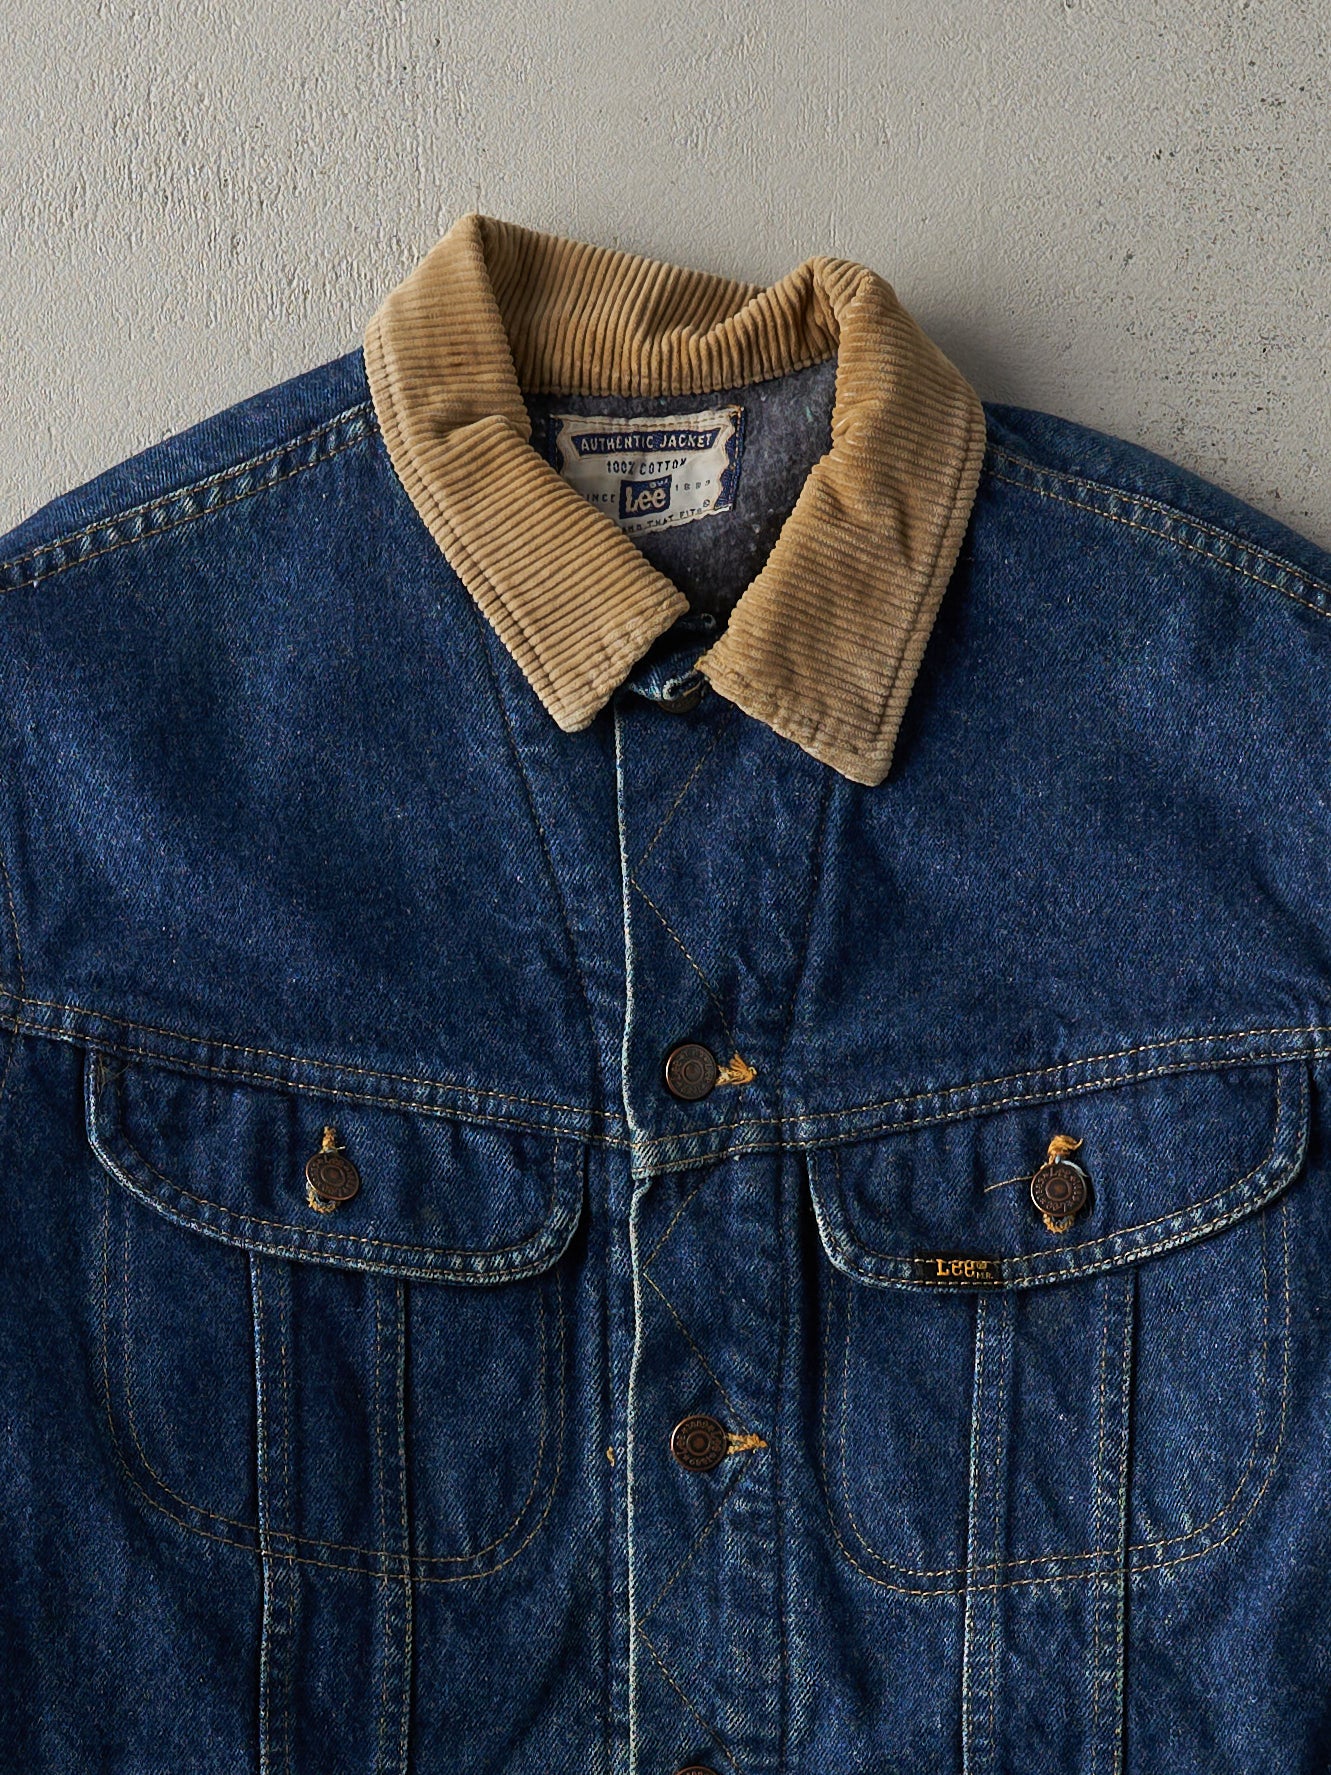 Vintage 80s Dark Wash Lee Blanket Lined Denim Jacket (M)